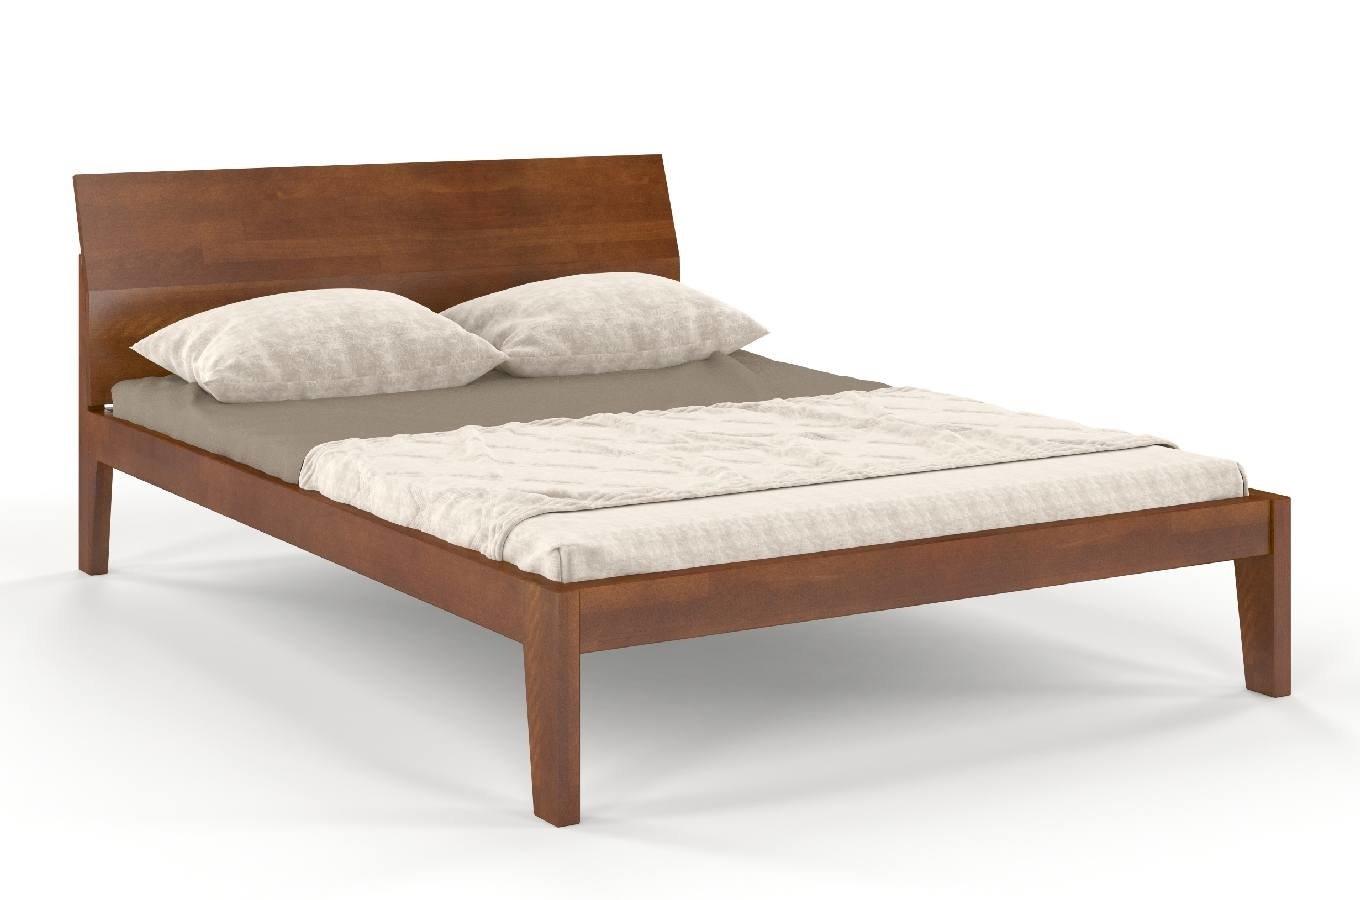 Łóżko drewniane bukowe Skandica AGAVA / 160x200 cm, kolor orzech